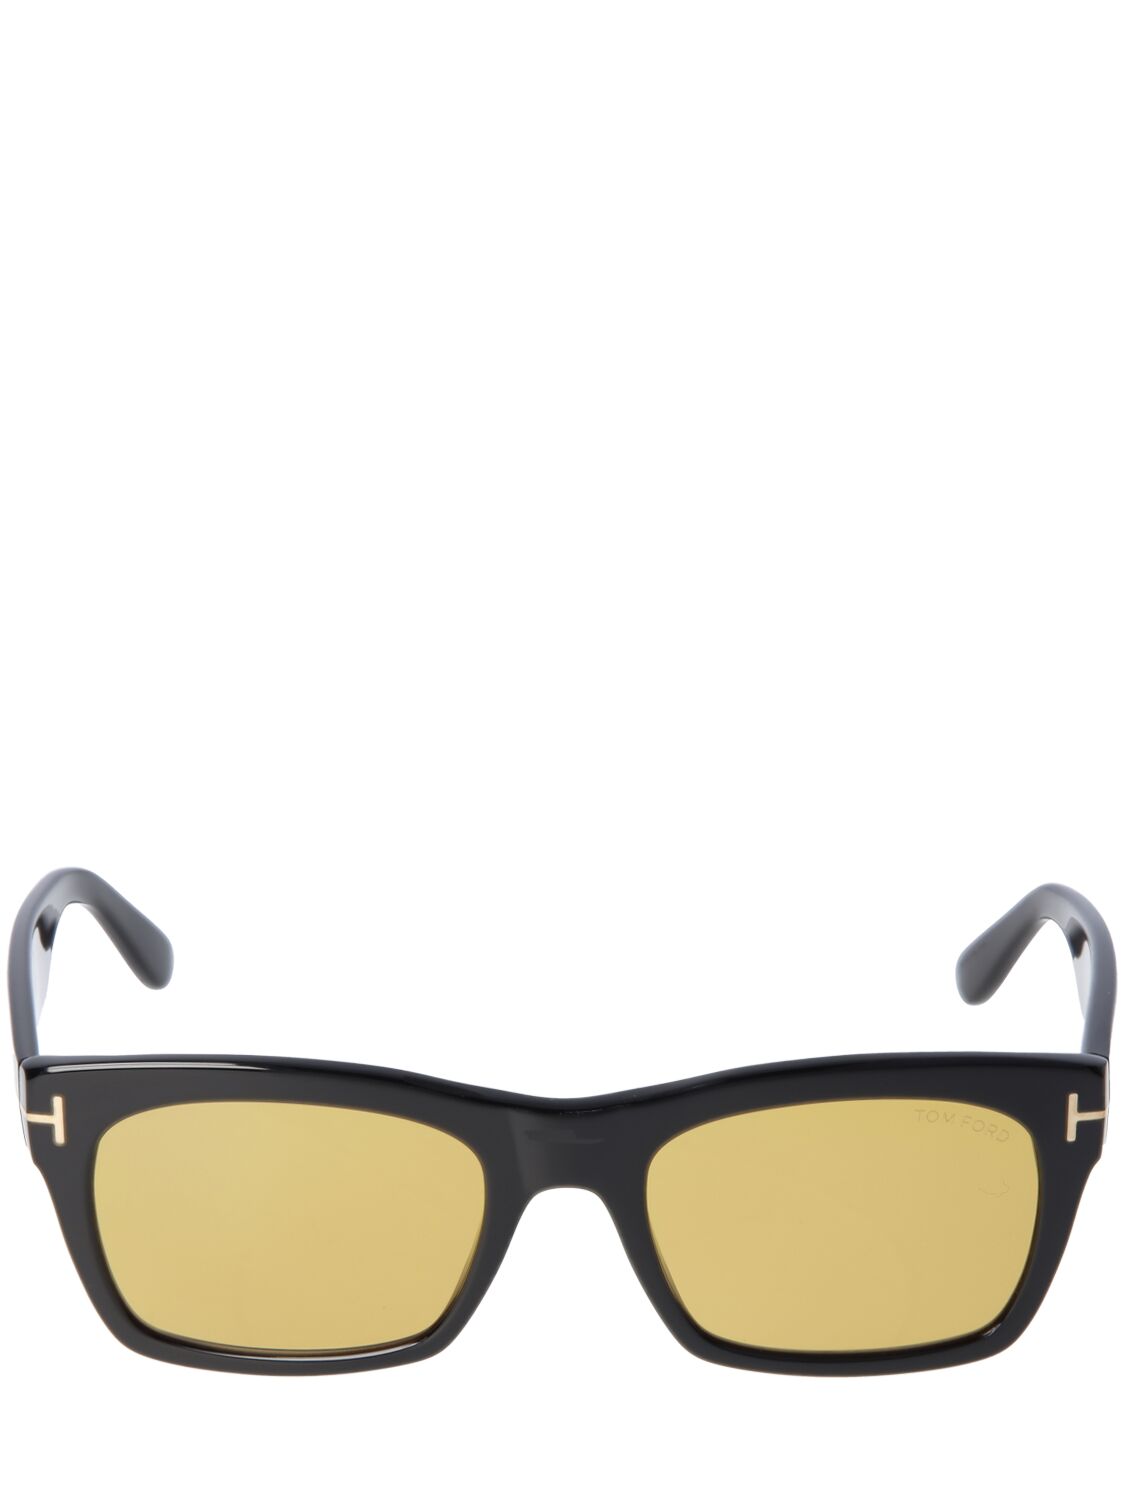 Image of Nico-02 Squared Acetate Sunglasses